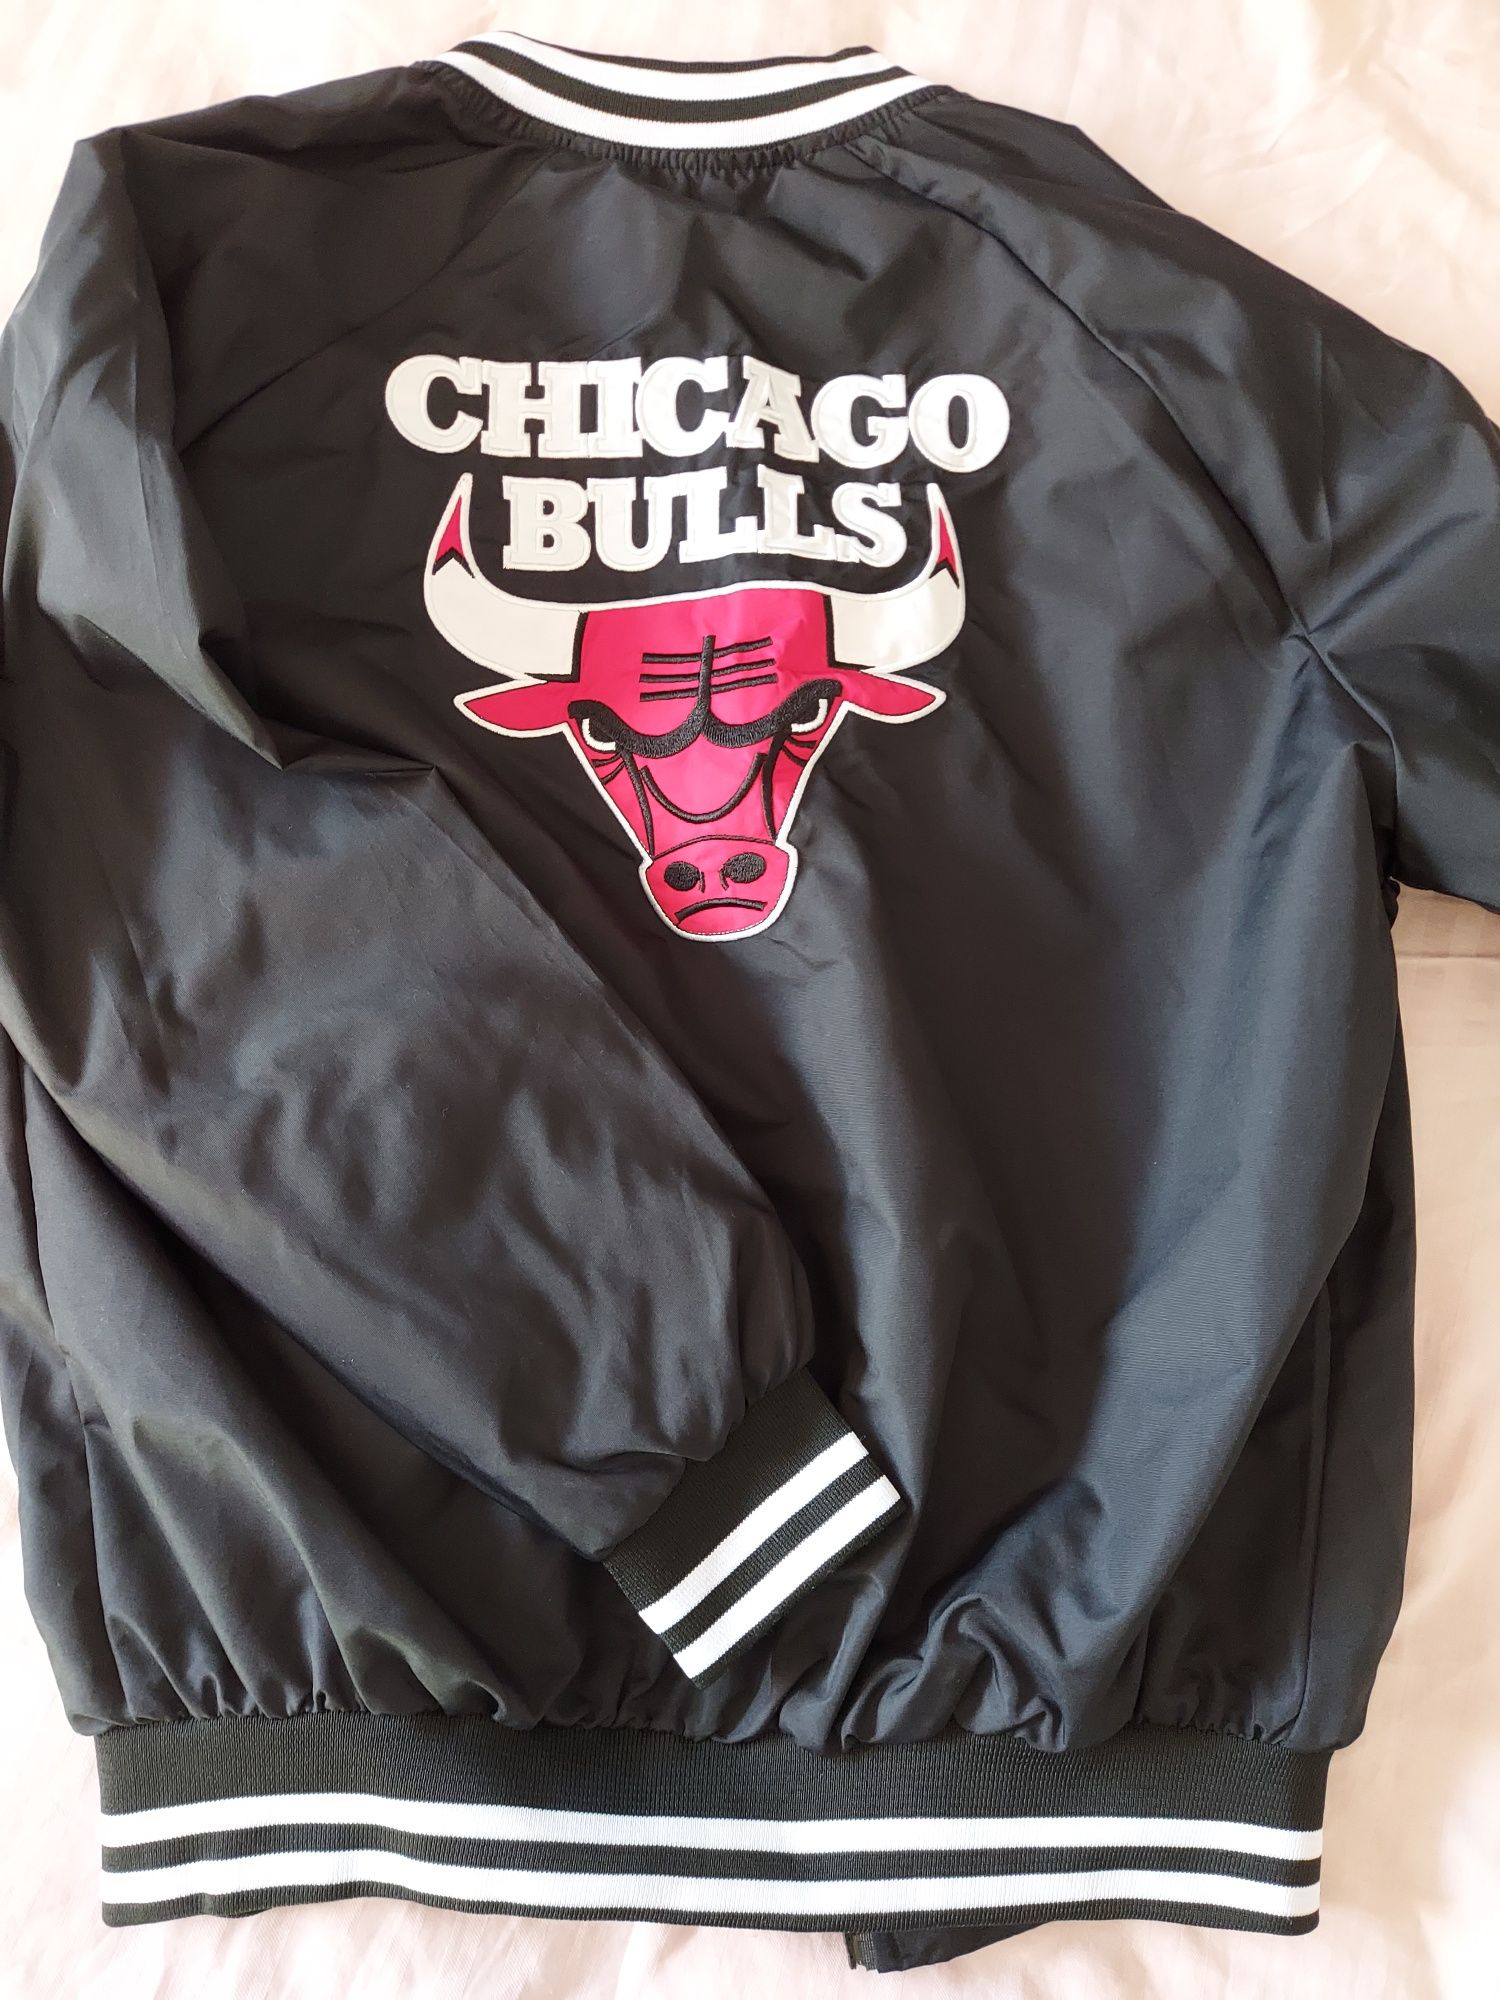 Greaca Chicago Bulls noua